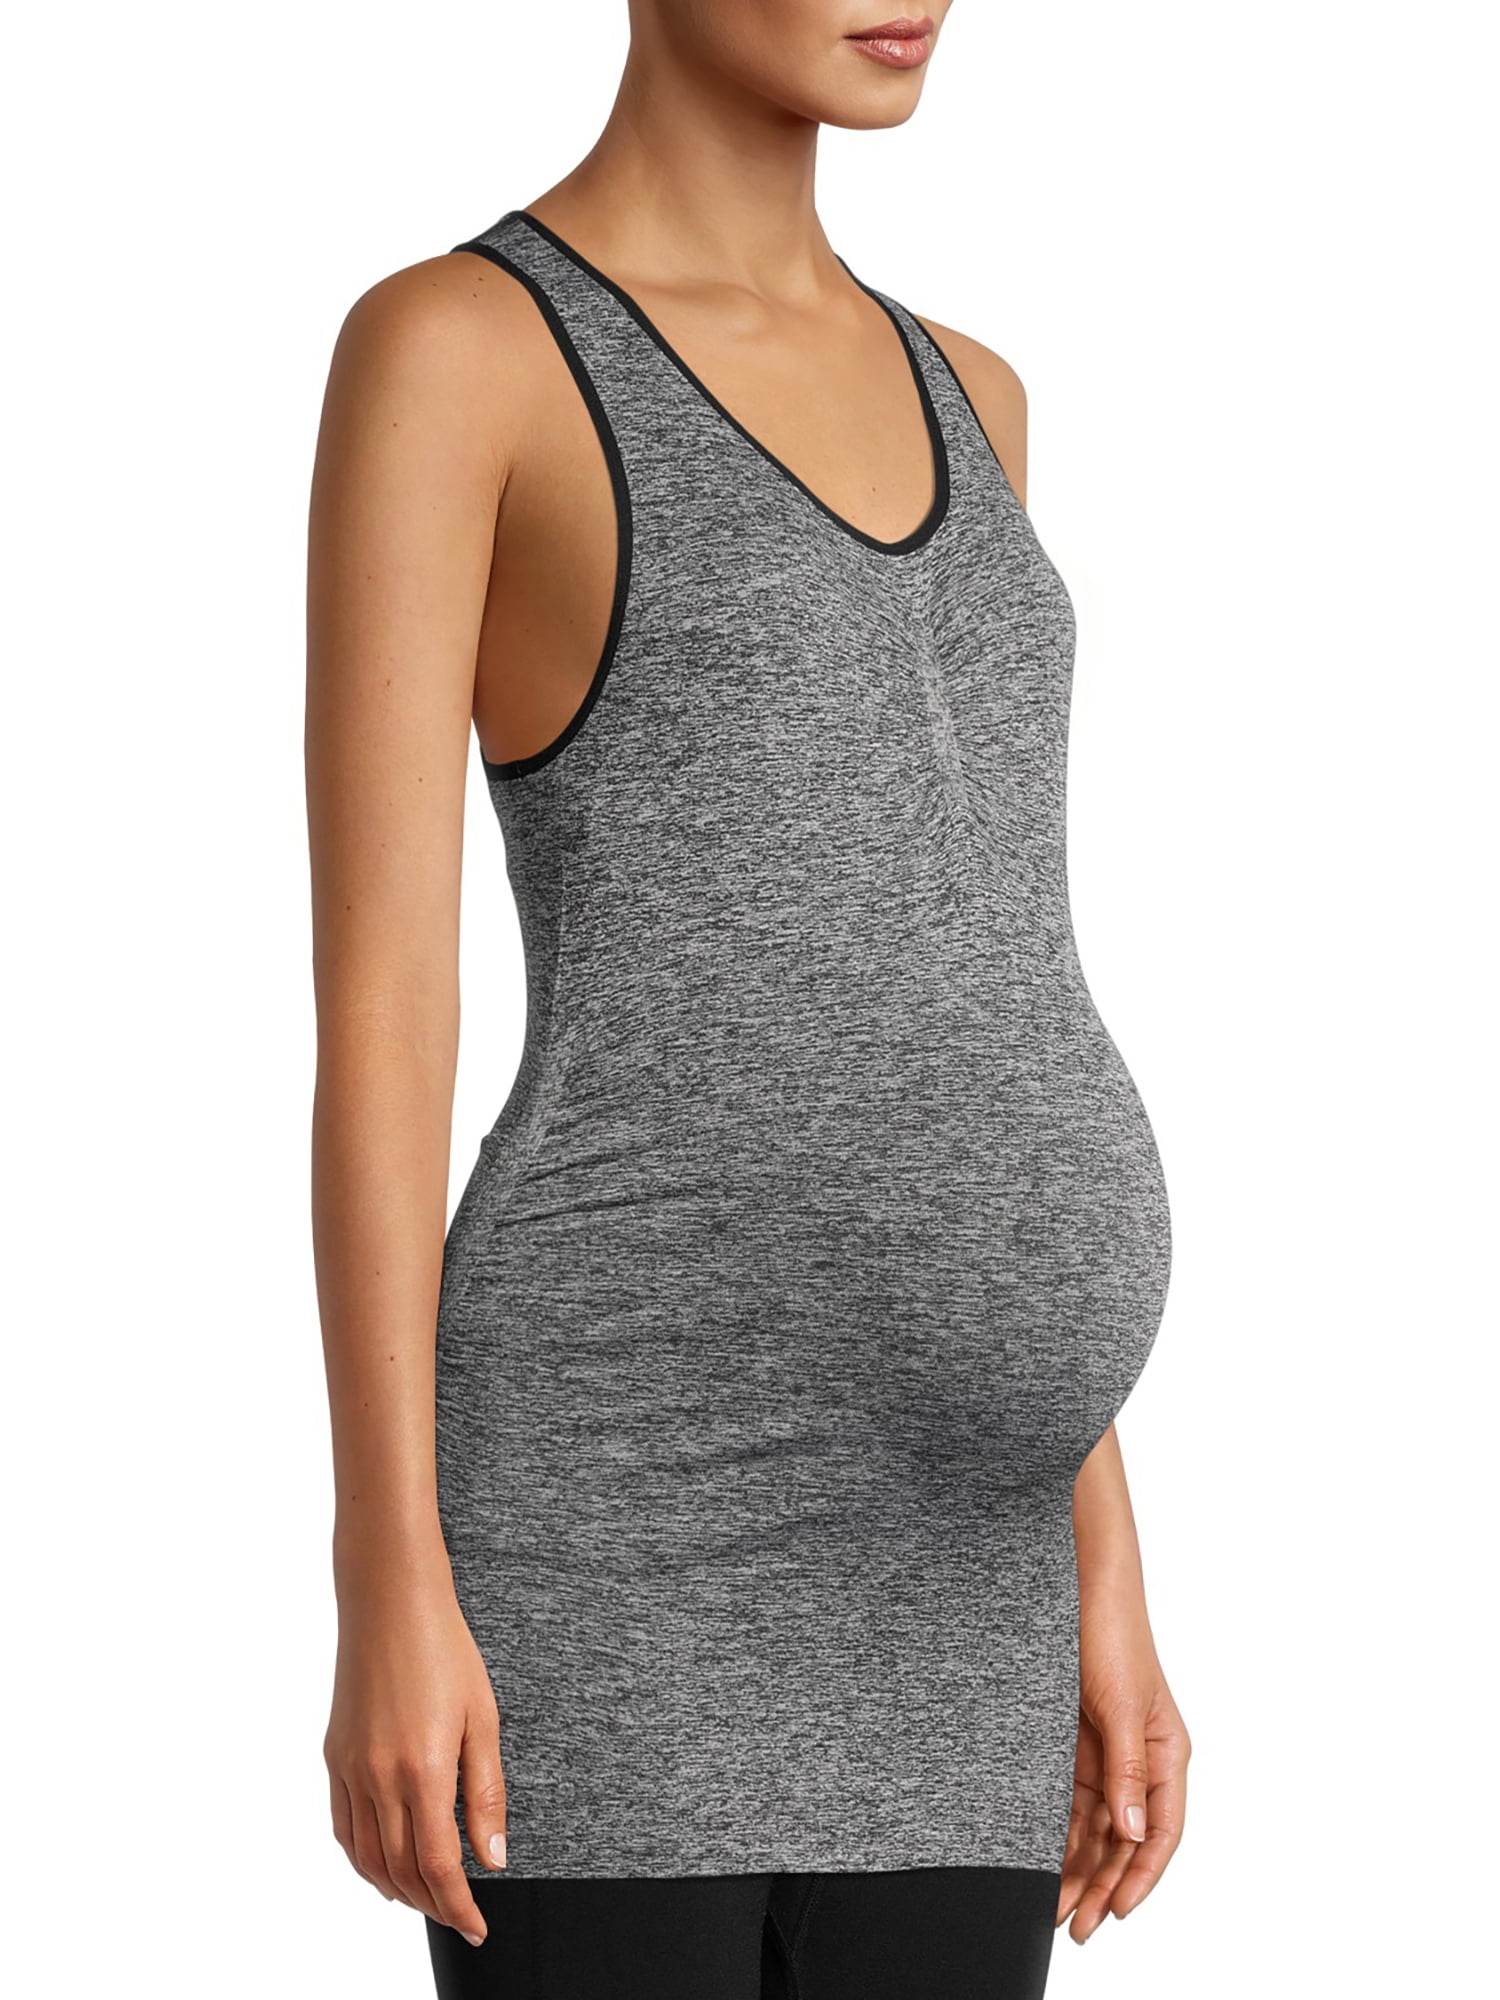 Ecavus Women's Maternity Tank Tops Seamless Racerback Sleeveless Workout Athletic Yoga Tops Pregnancy Shirt 